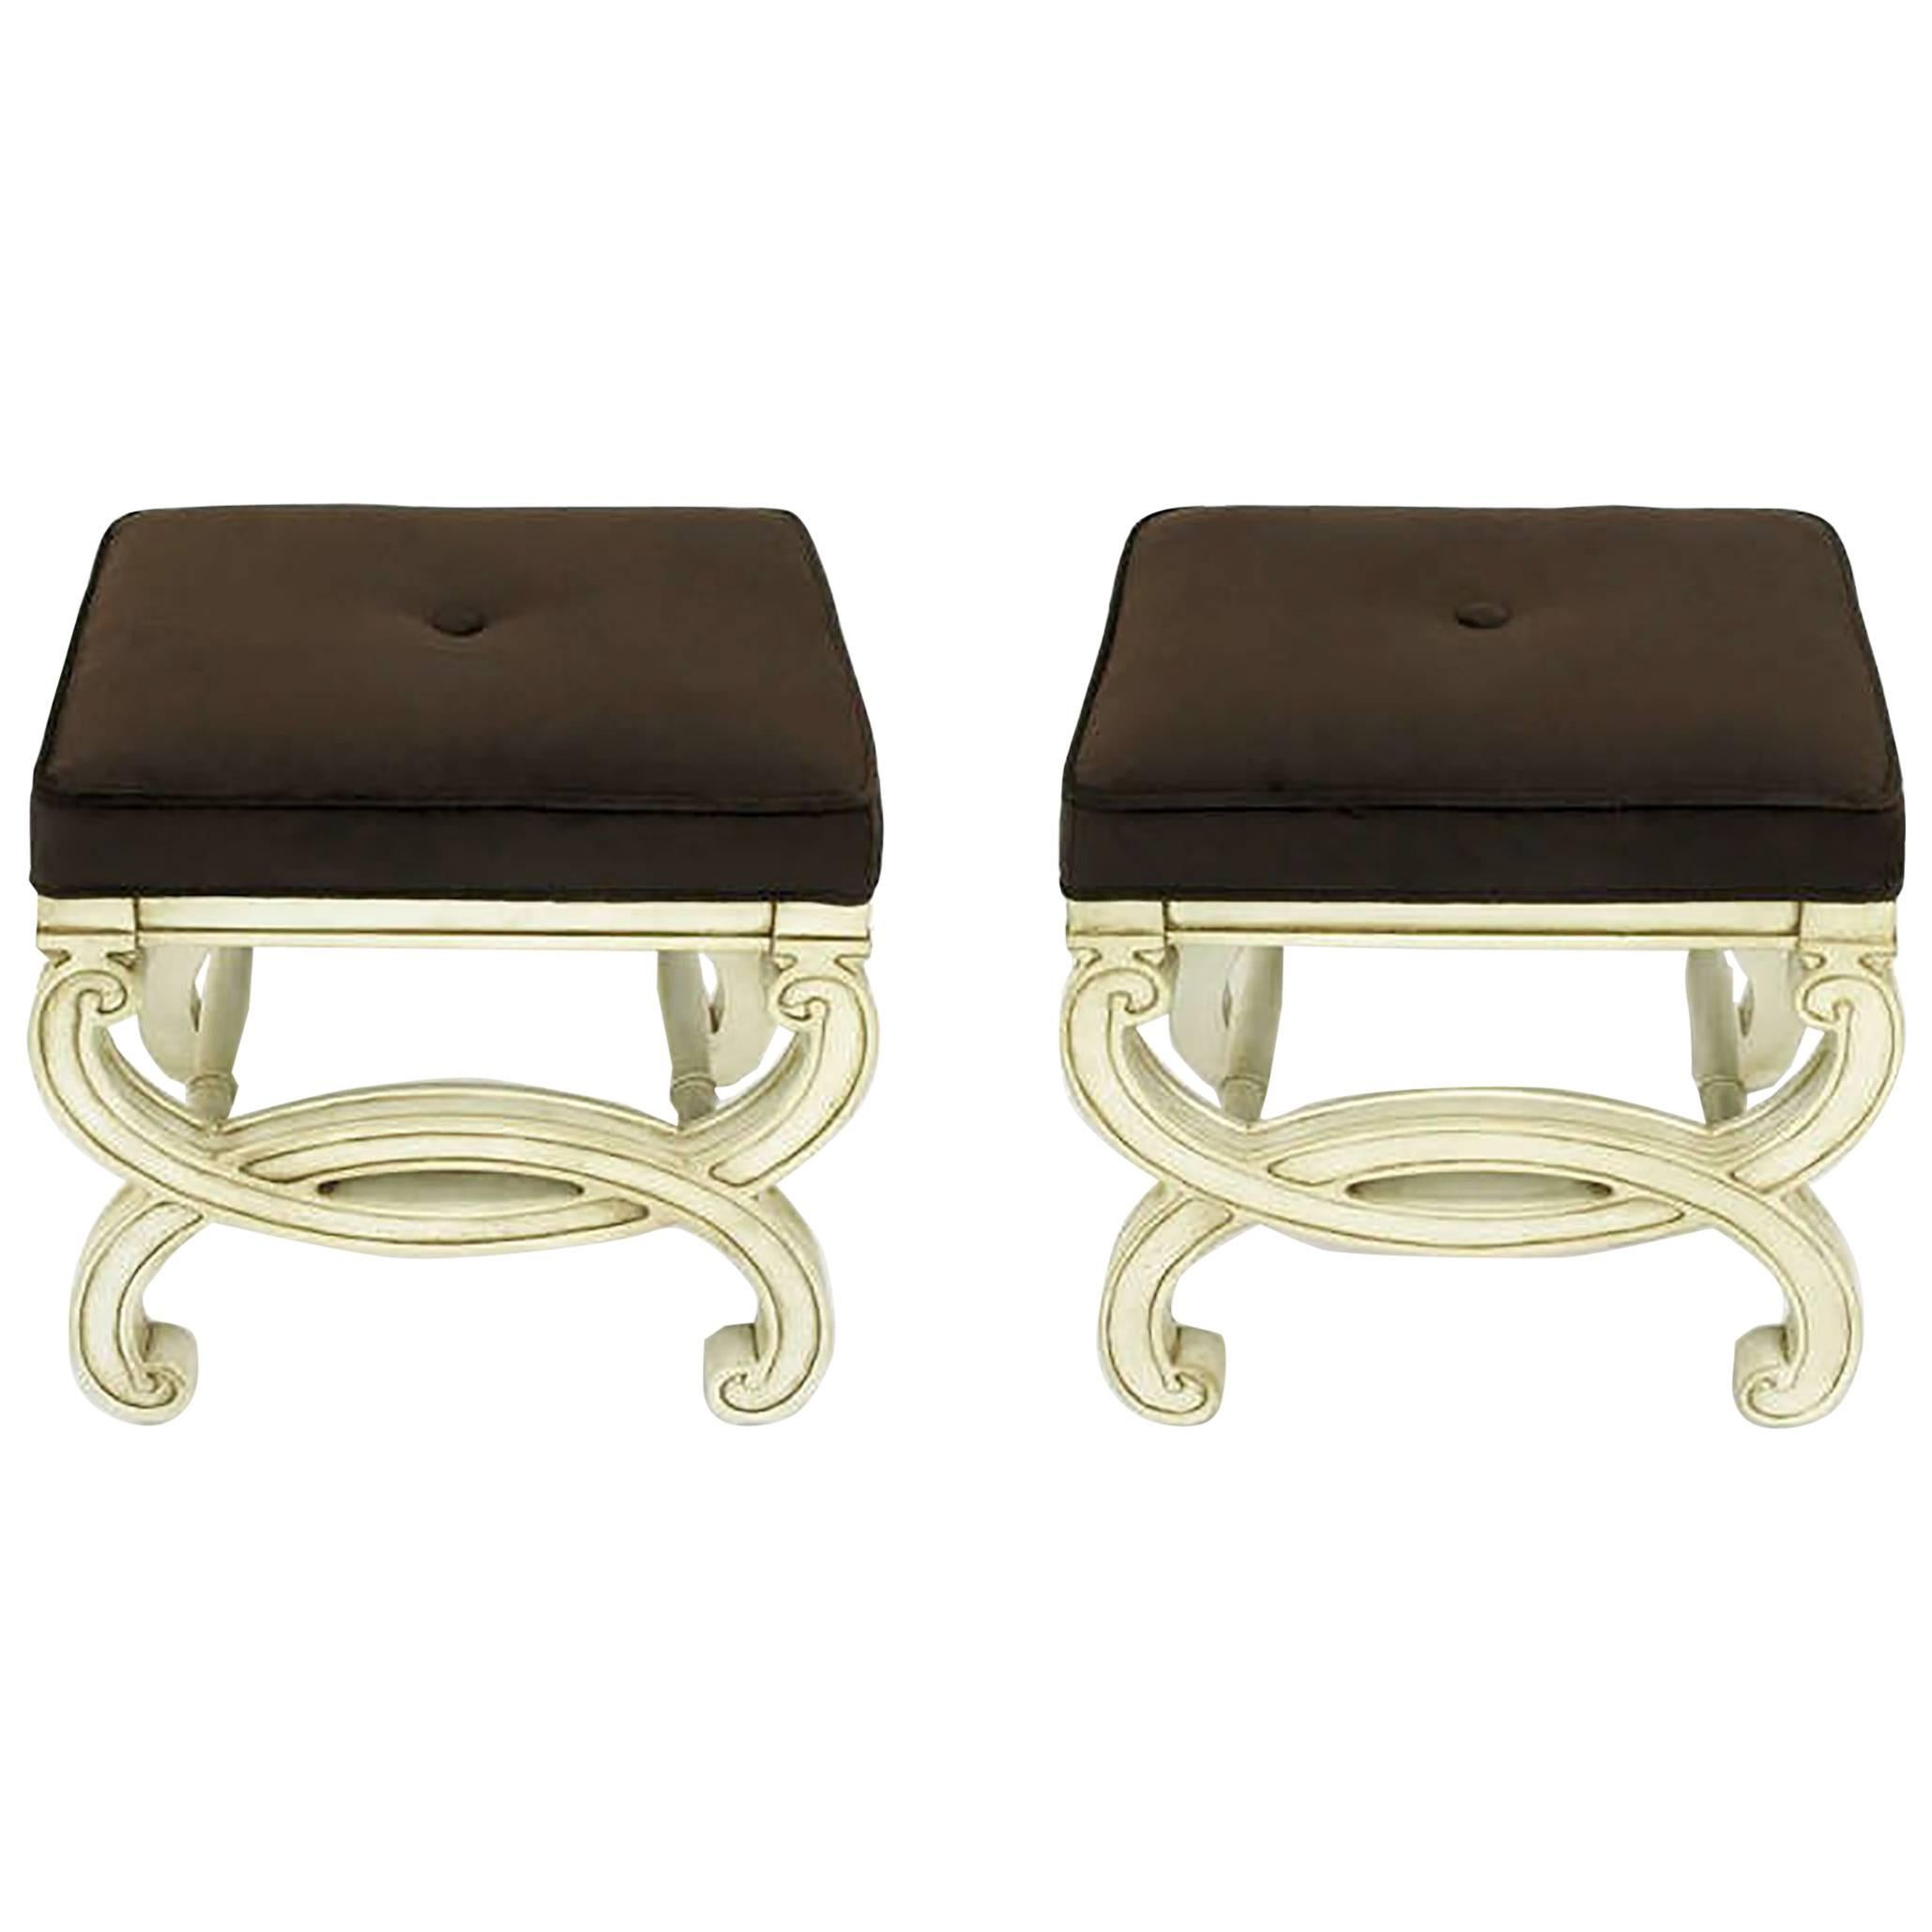 Pair of Regency Style Interlocking Curule Benches in Glazed Ivory & Sable Velvet